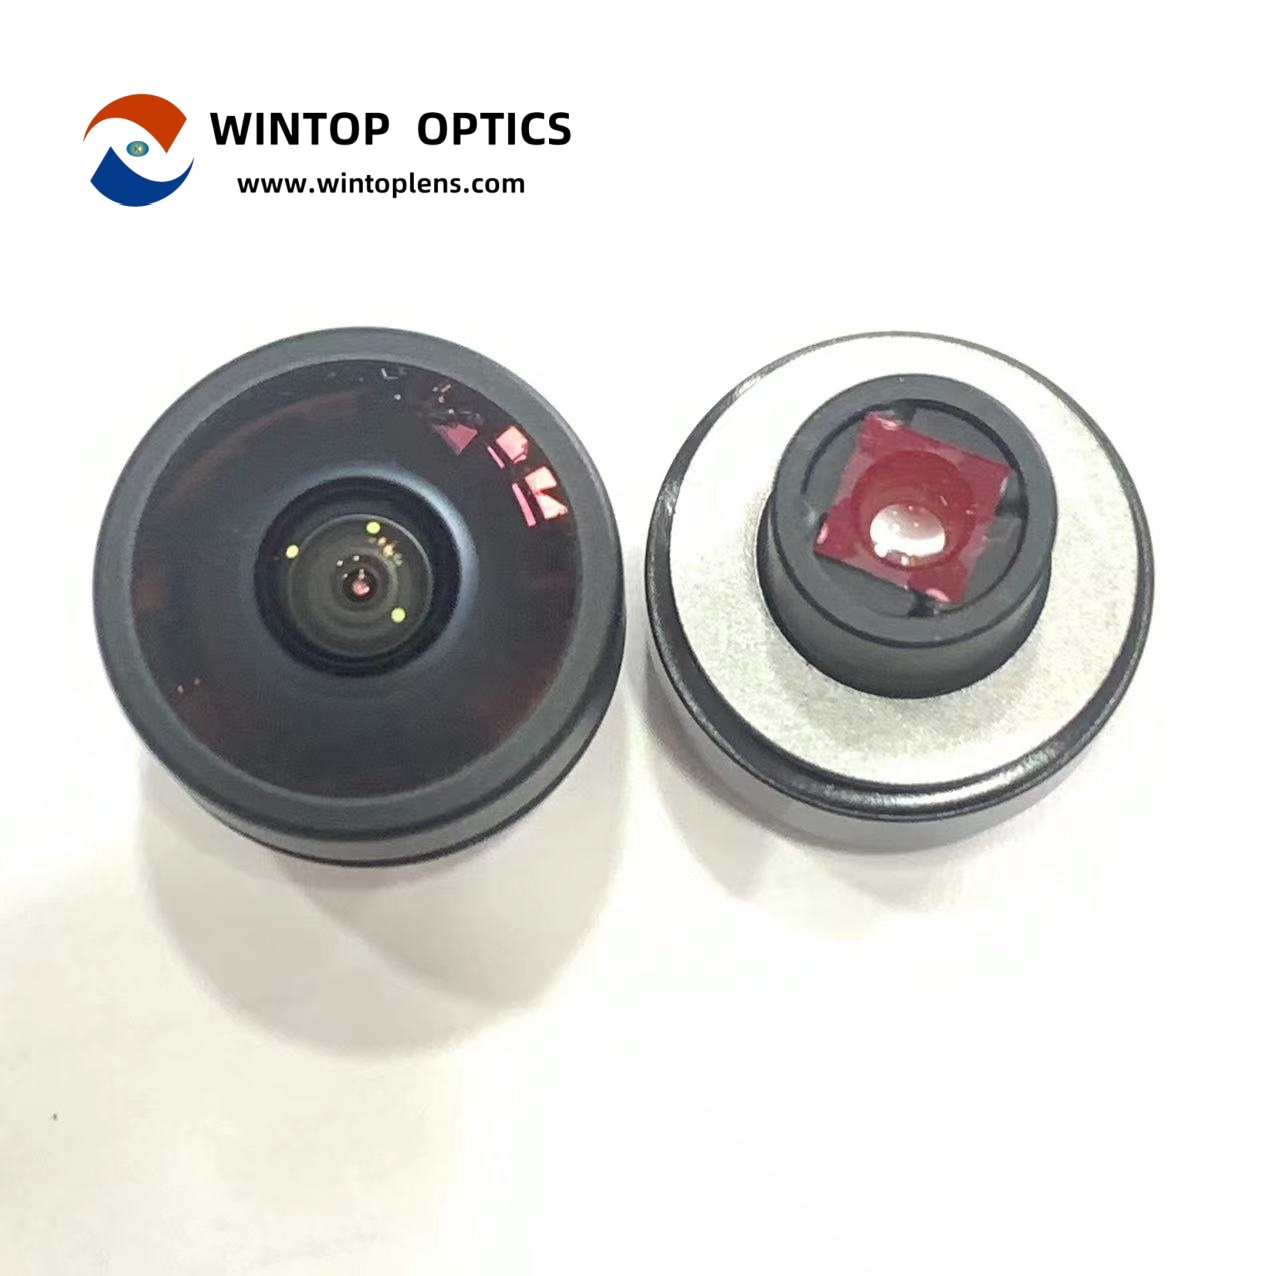 Objectif de caméra de recul panoramique HFOV 200 degrés YT-7070-H1-A - WINTOP OPTICS